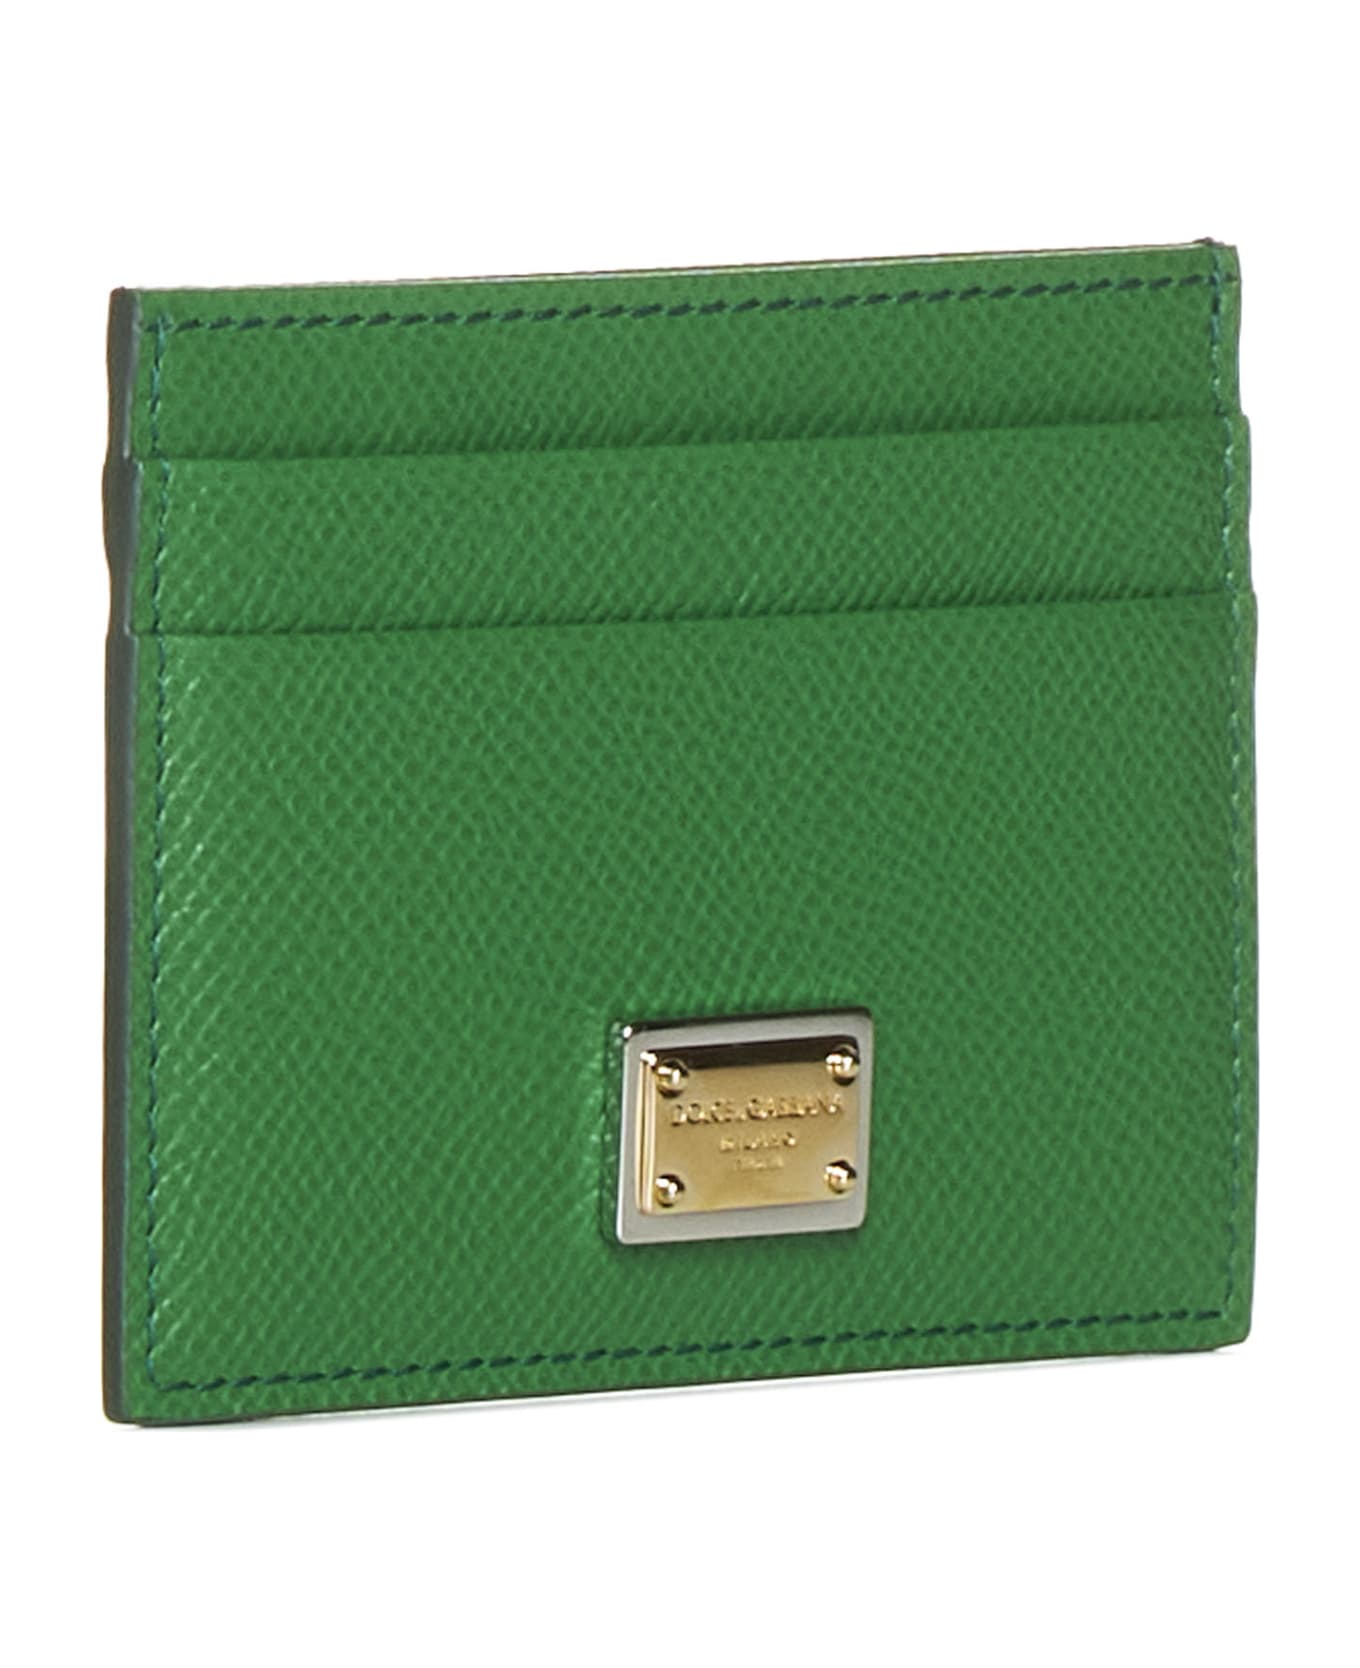 Dolce & Gabbana Wallet - Verde